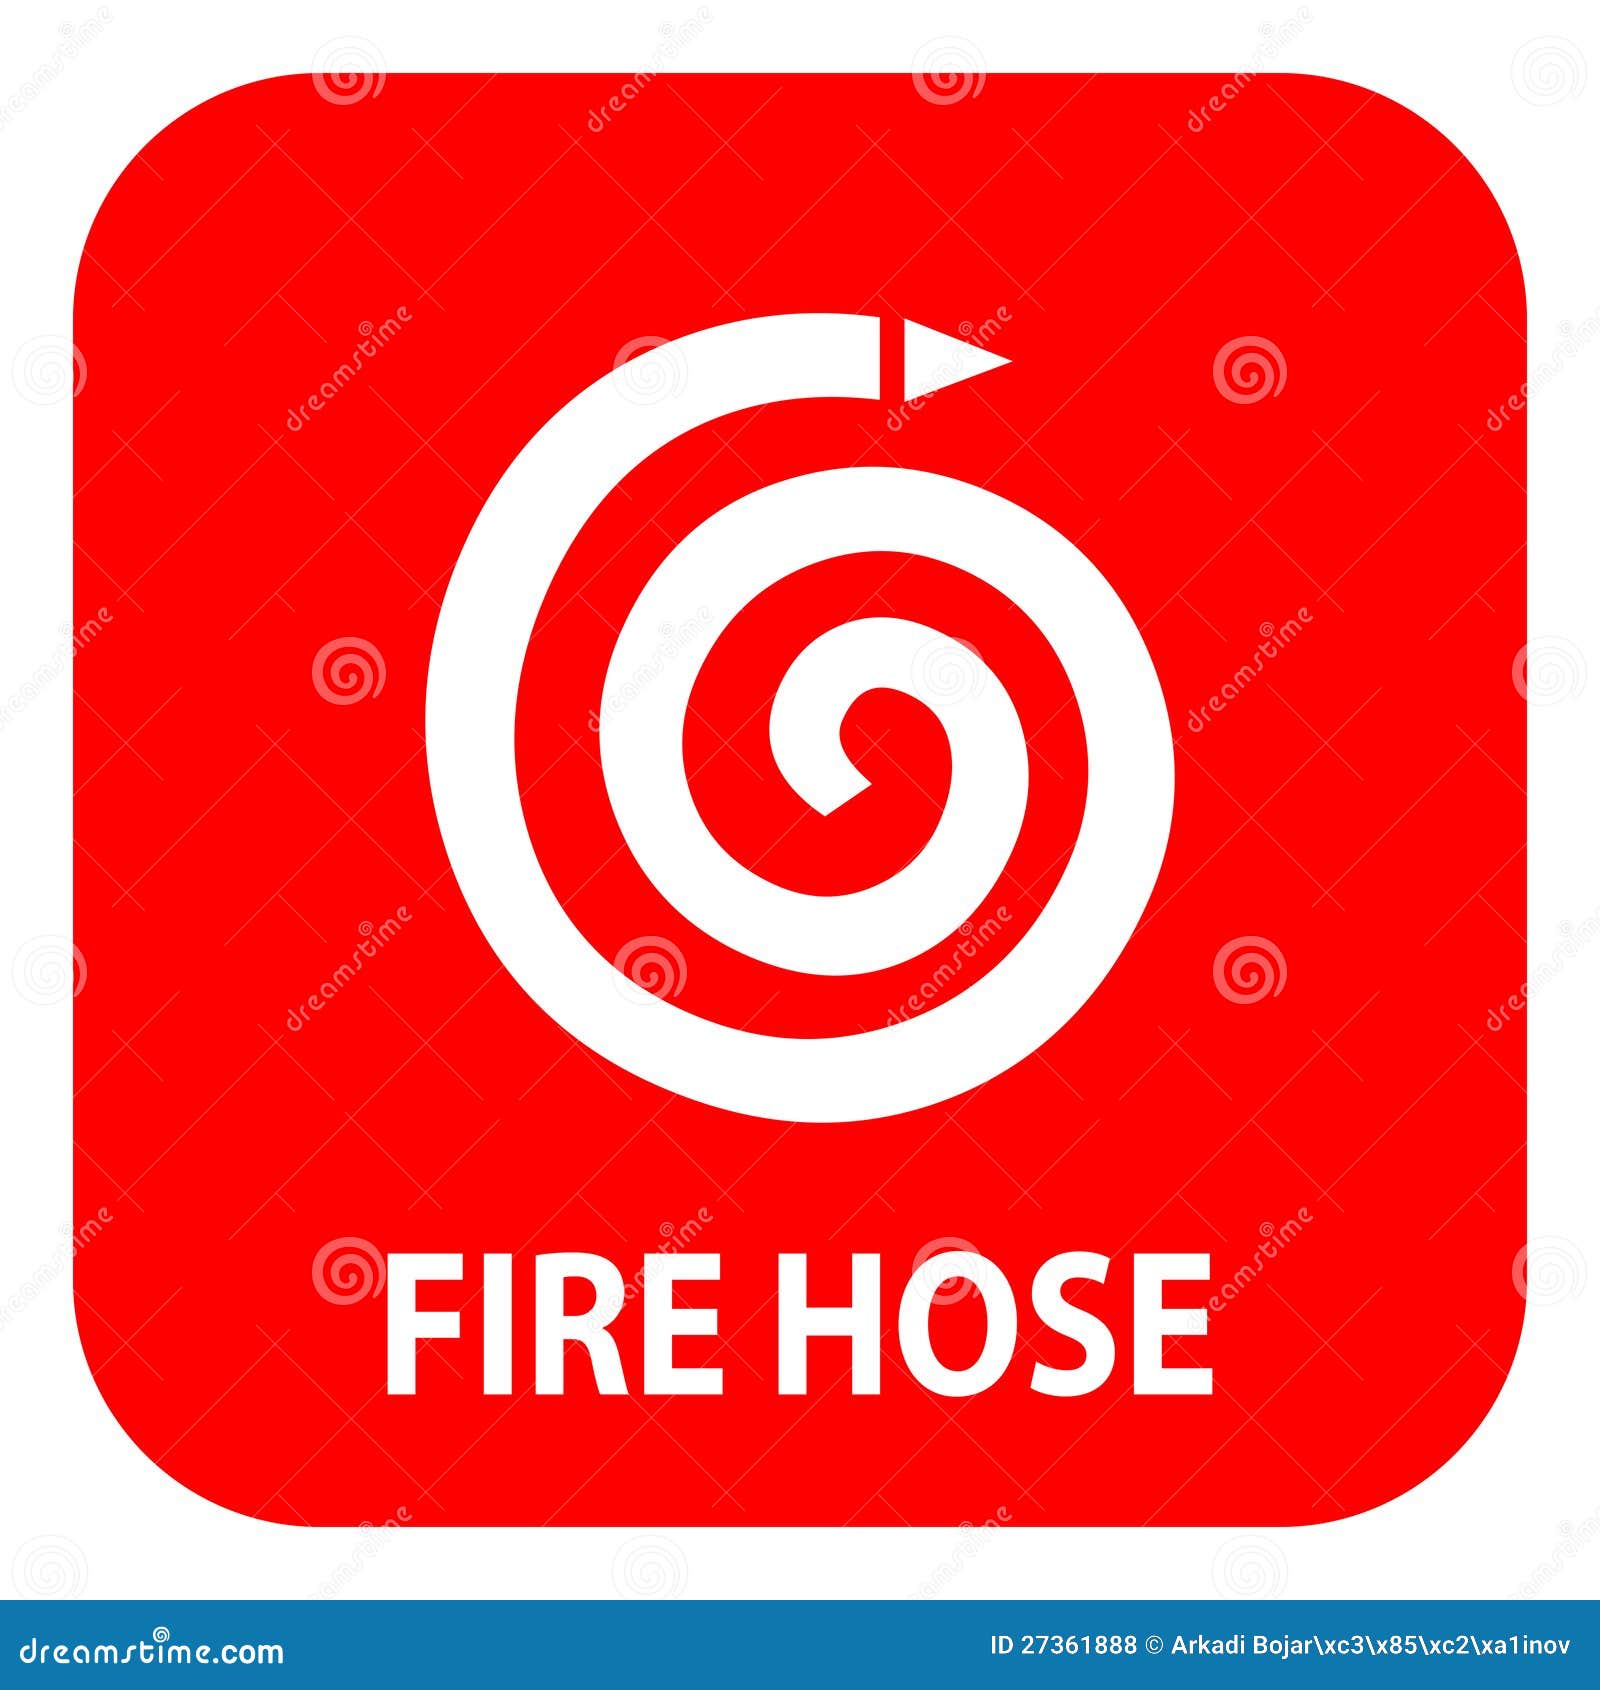 clipart fire hose reel - photo #27